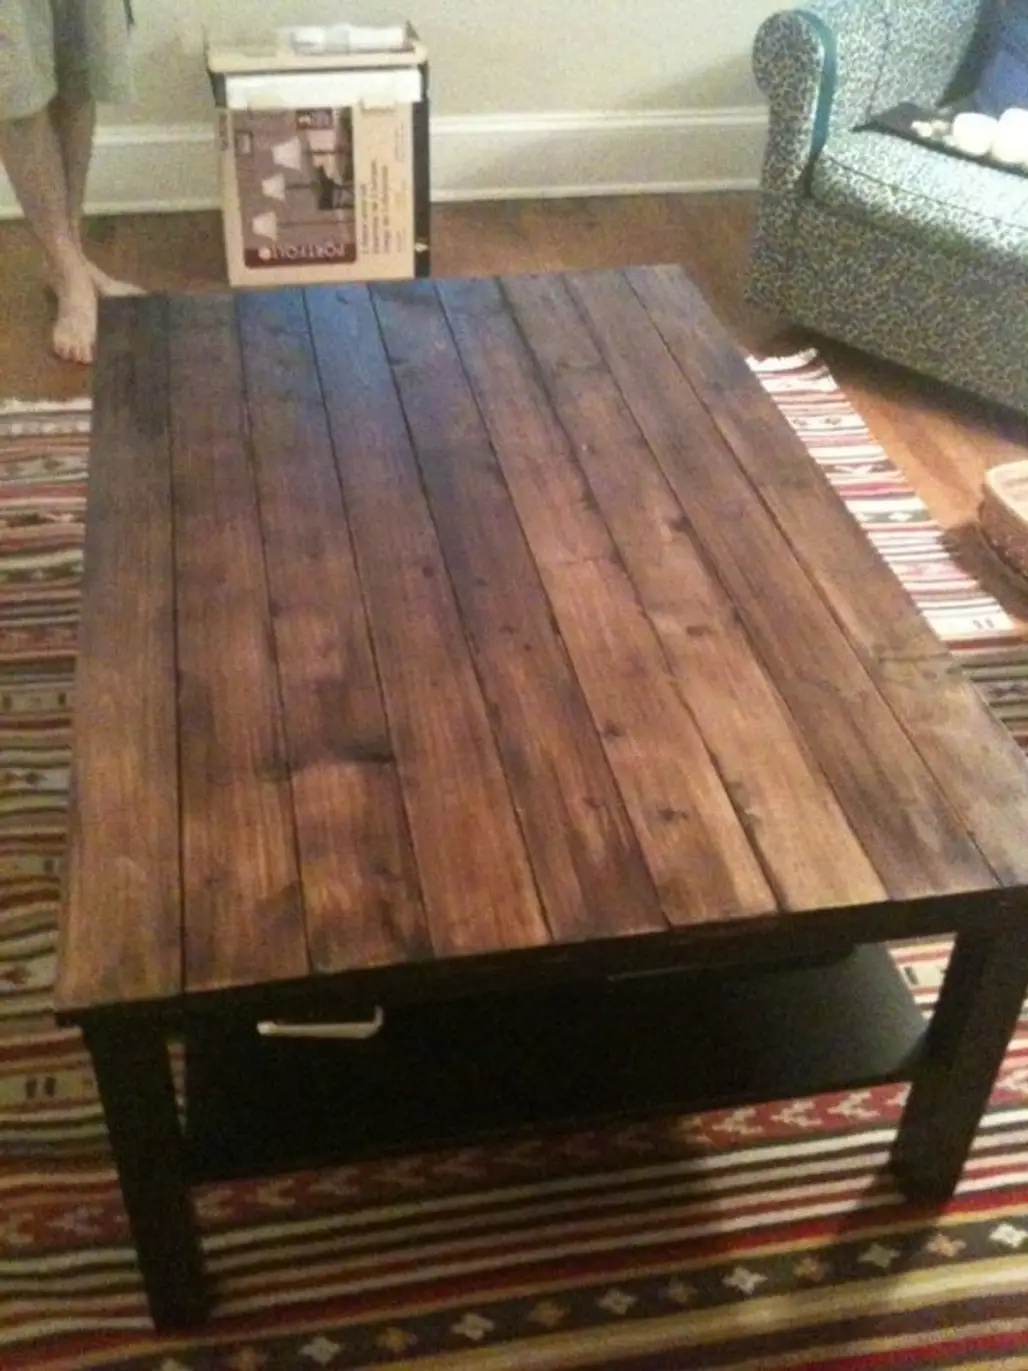 furniture,man made object,table,hardwood,wood,